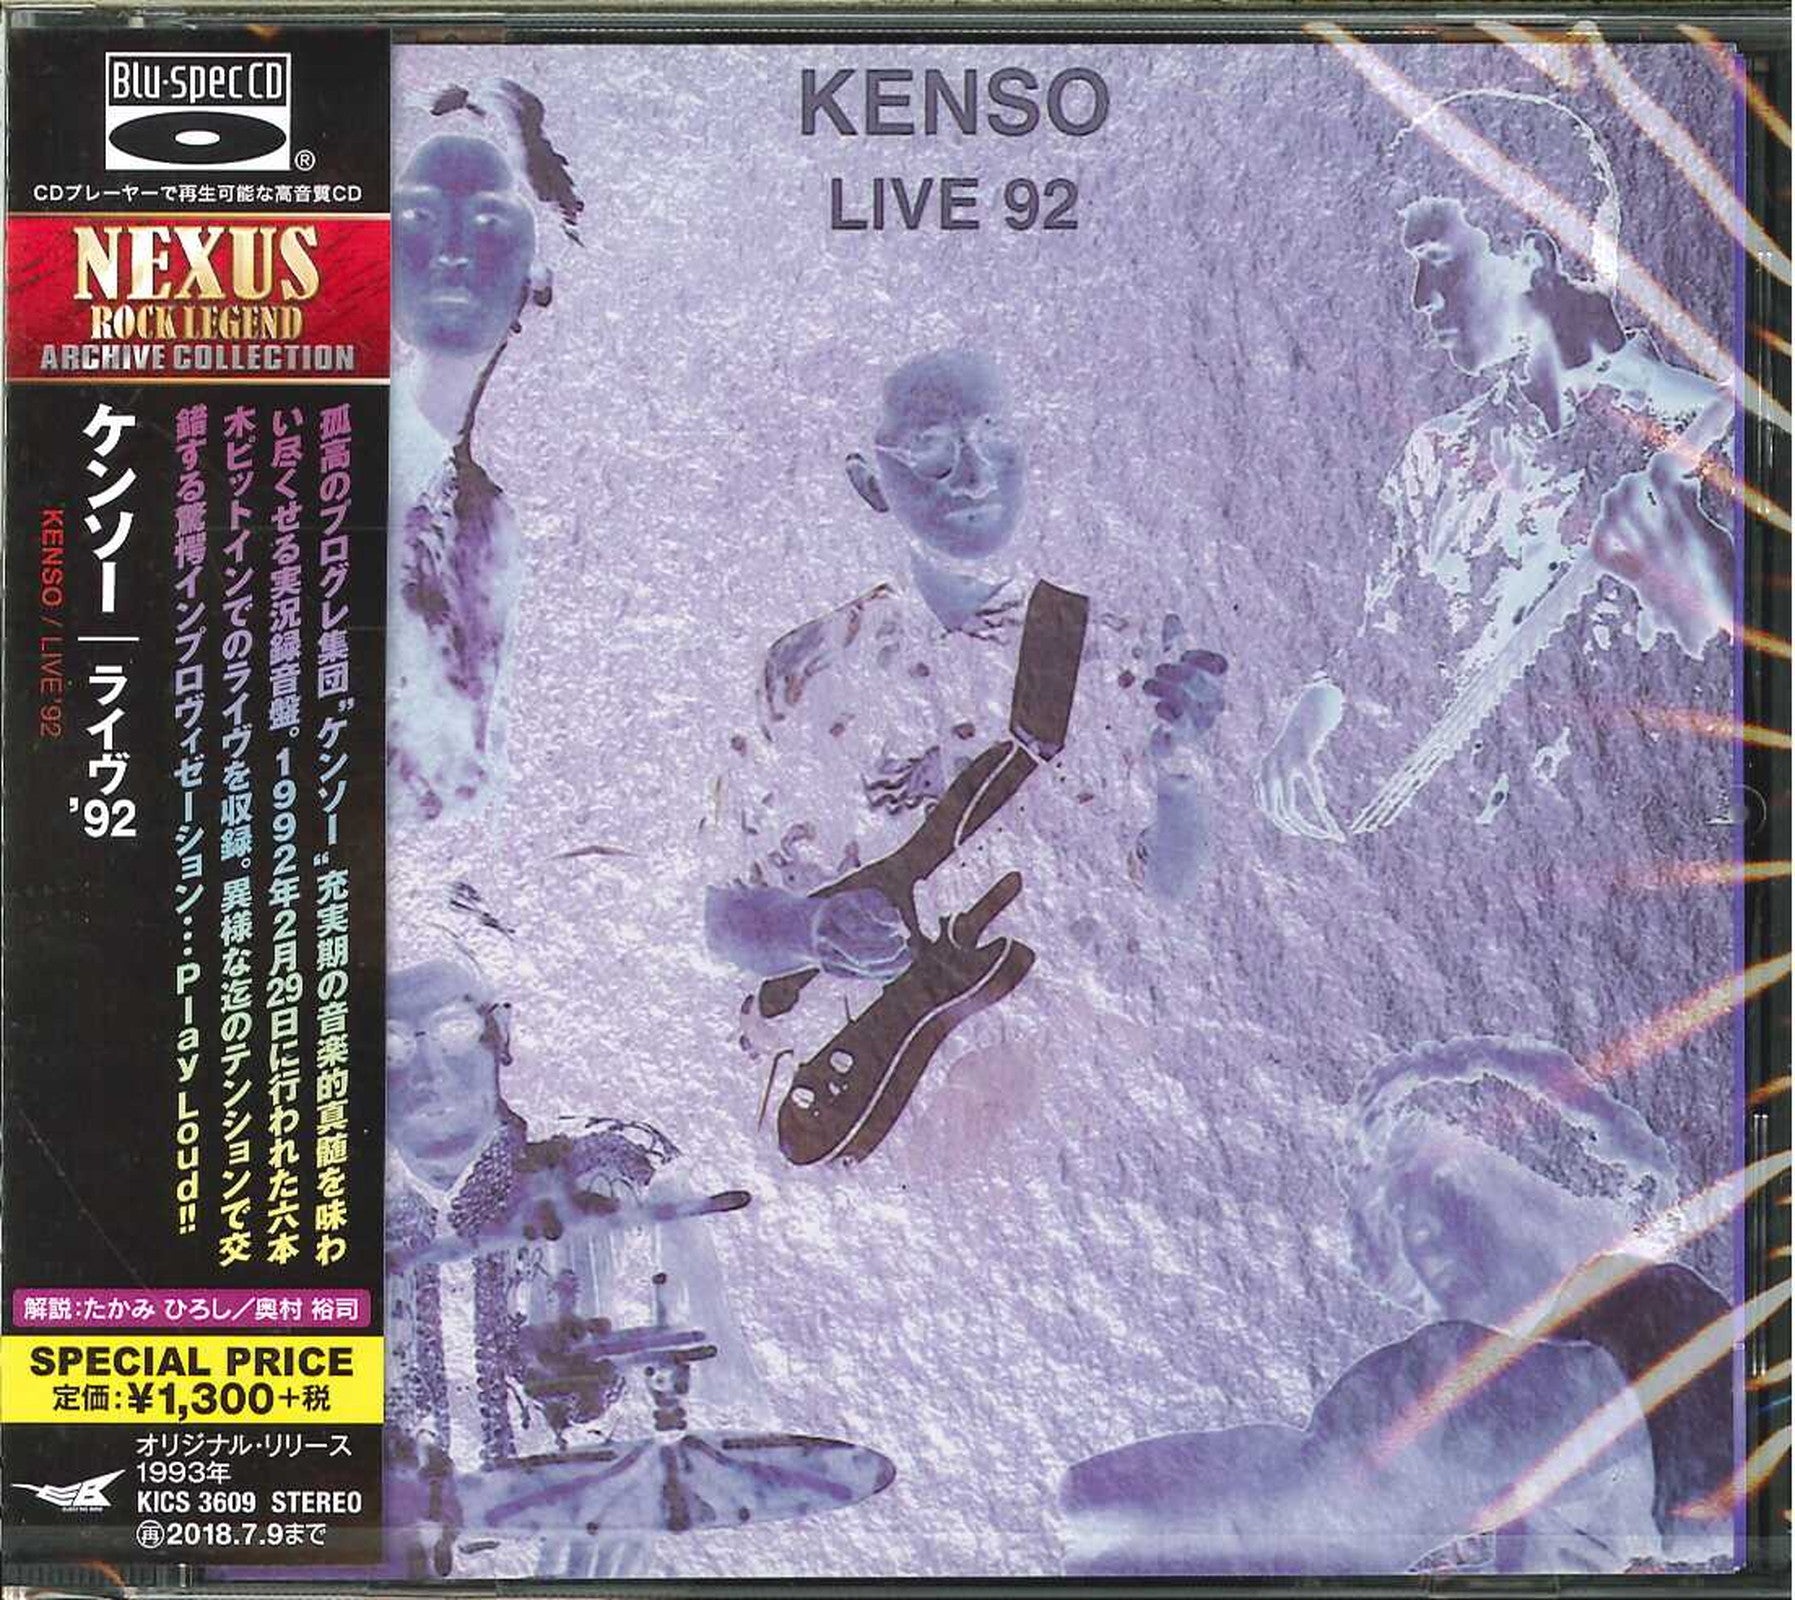 Kenso - Live '92 - Japan Blu-spec CD – CDs Vinyl Japan Store CD